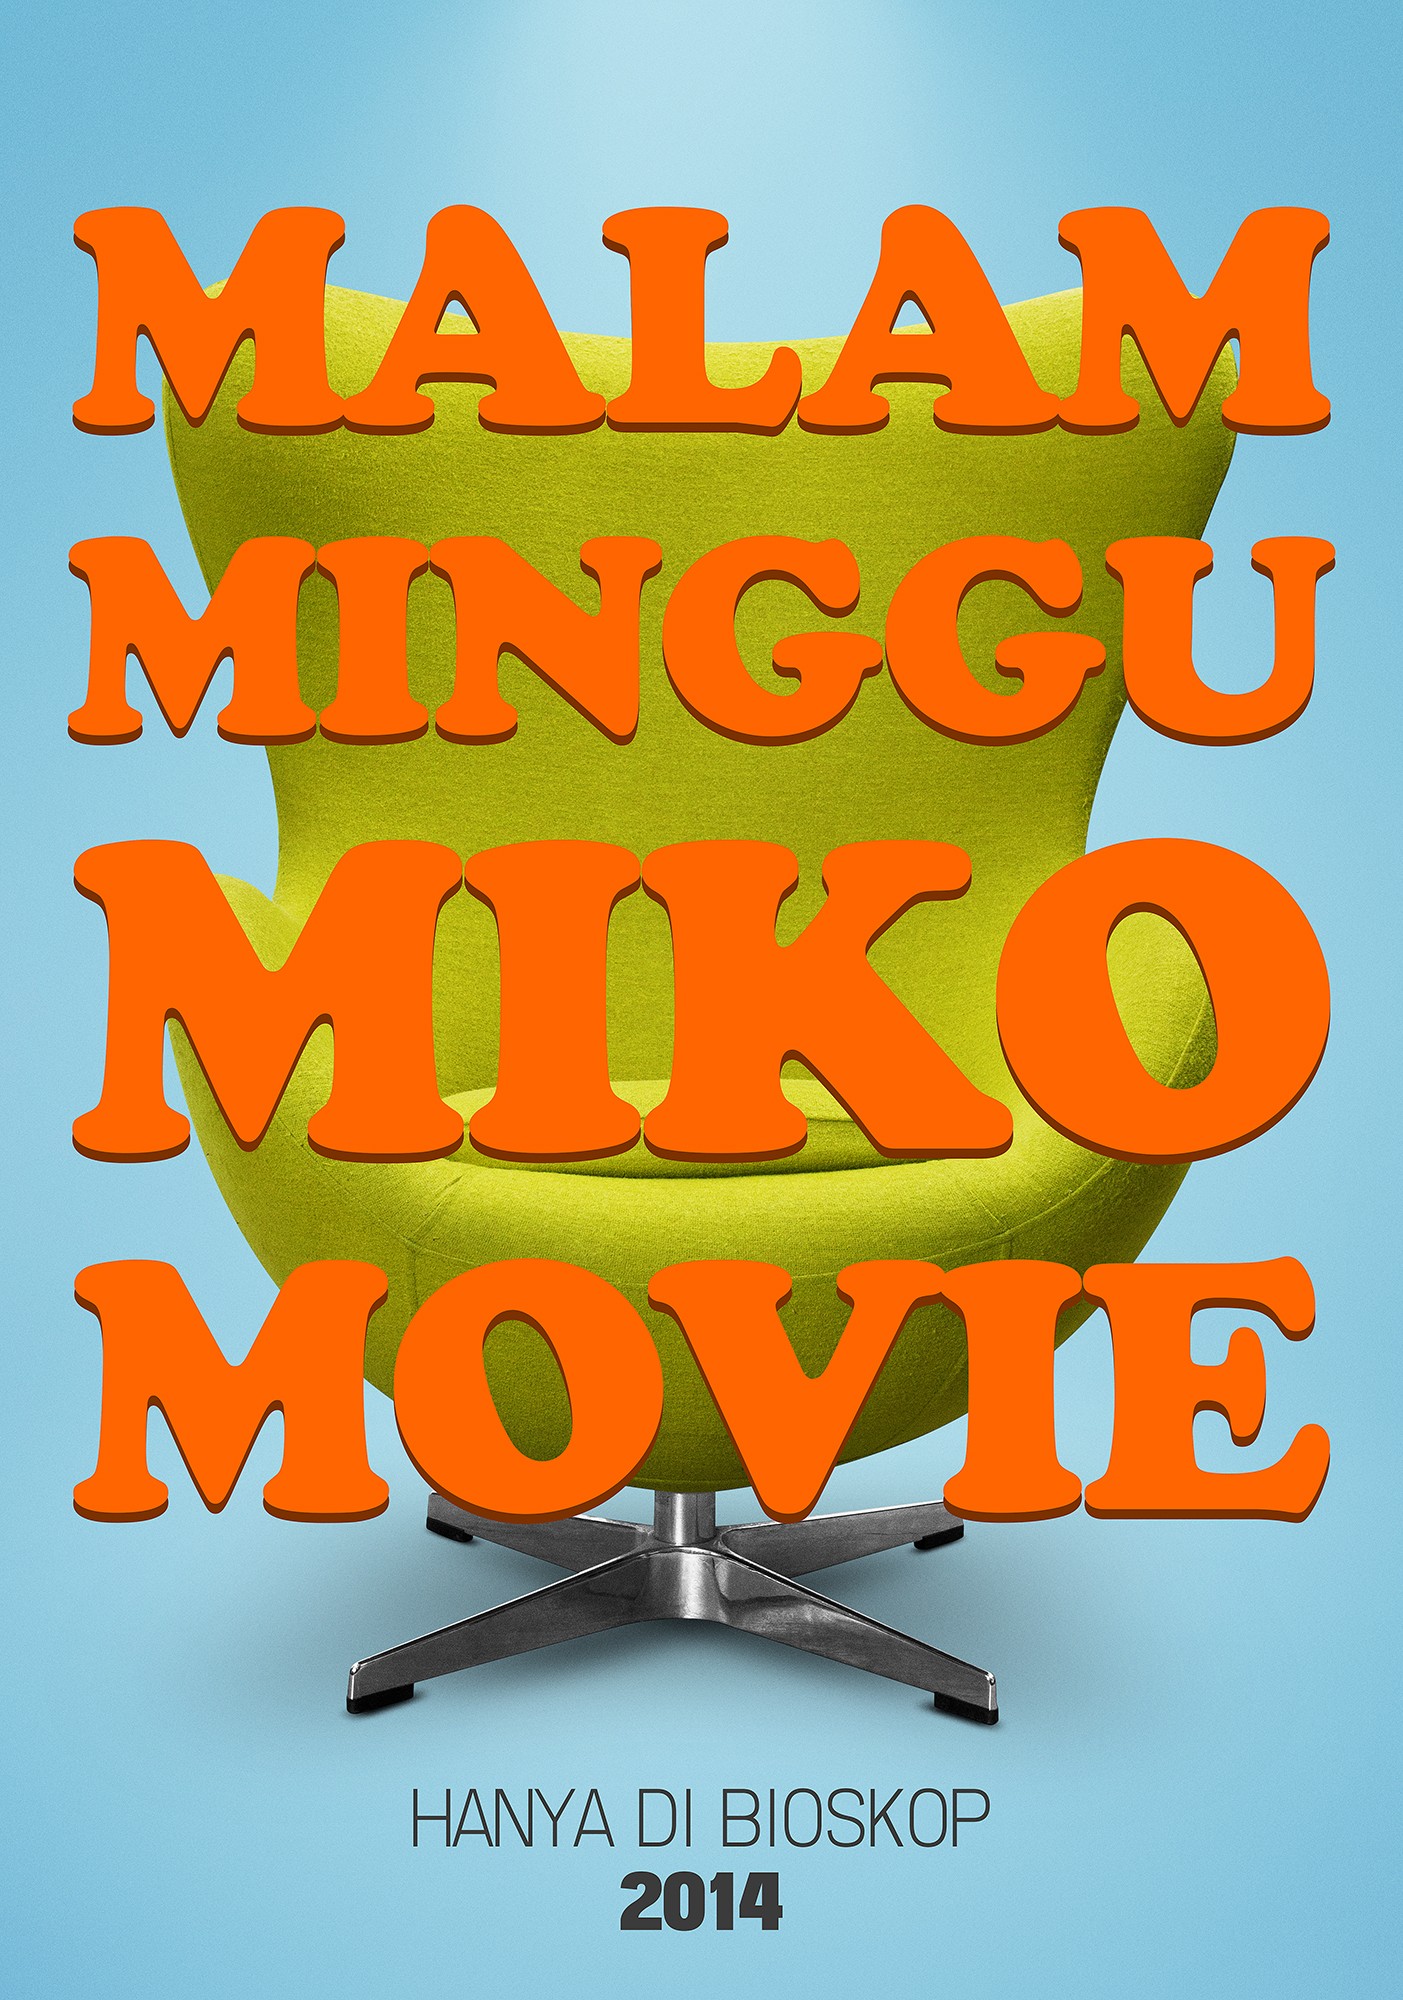 Mega Sized Movie Poster Image for Malam Minggu Miko Movie (#1 of 6)